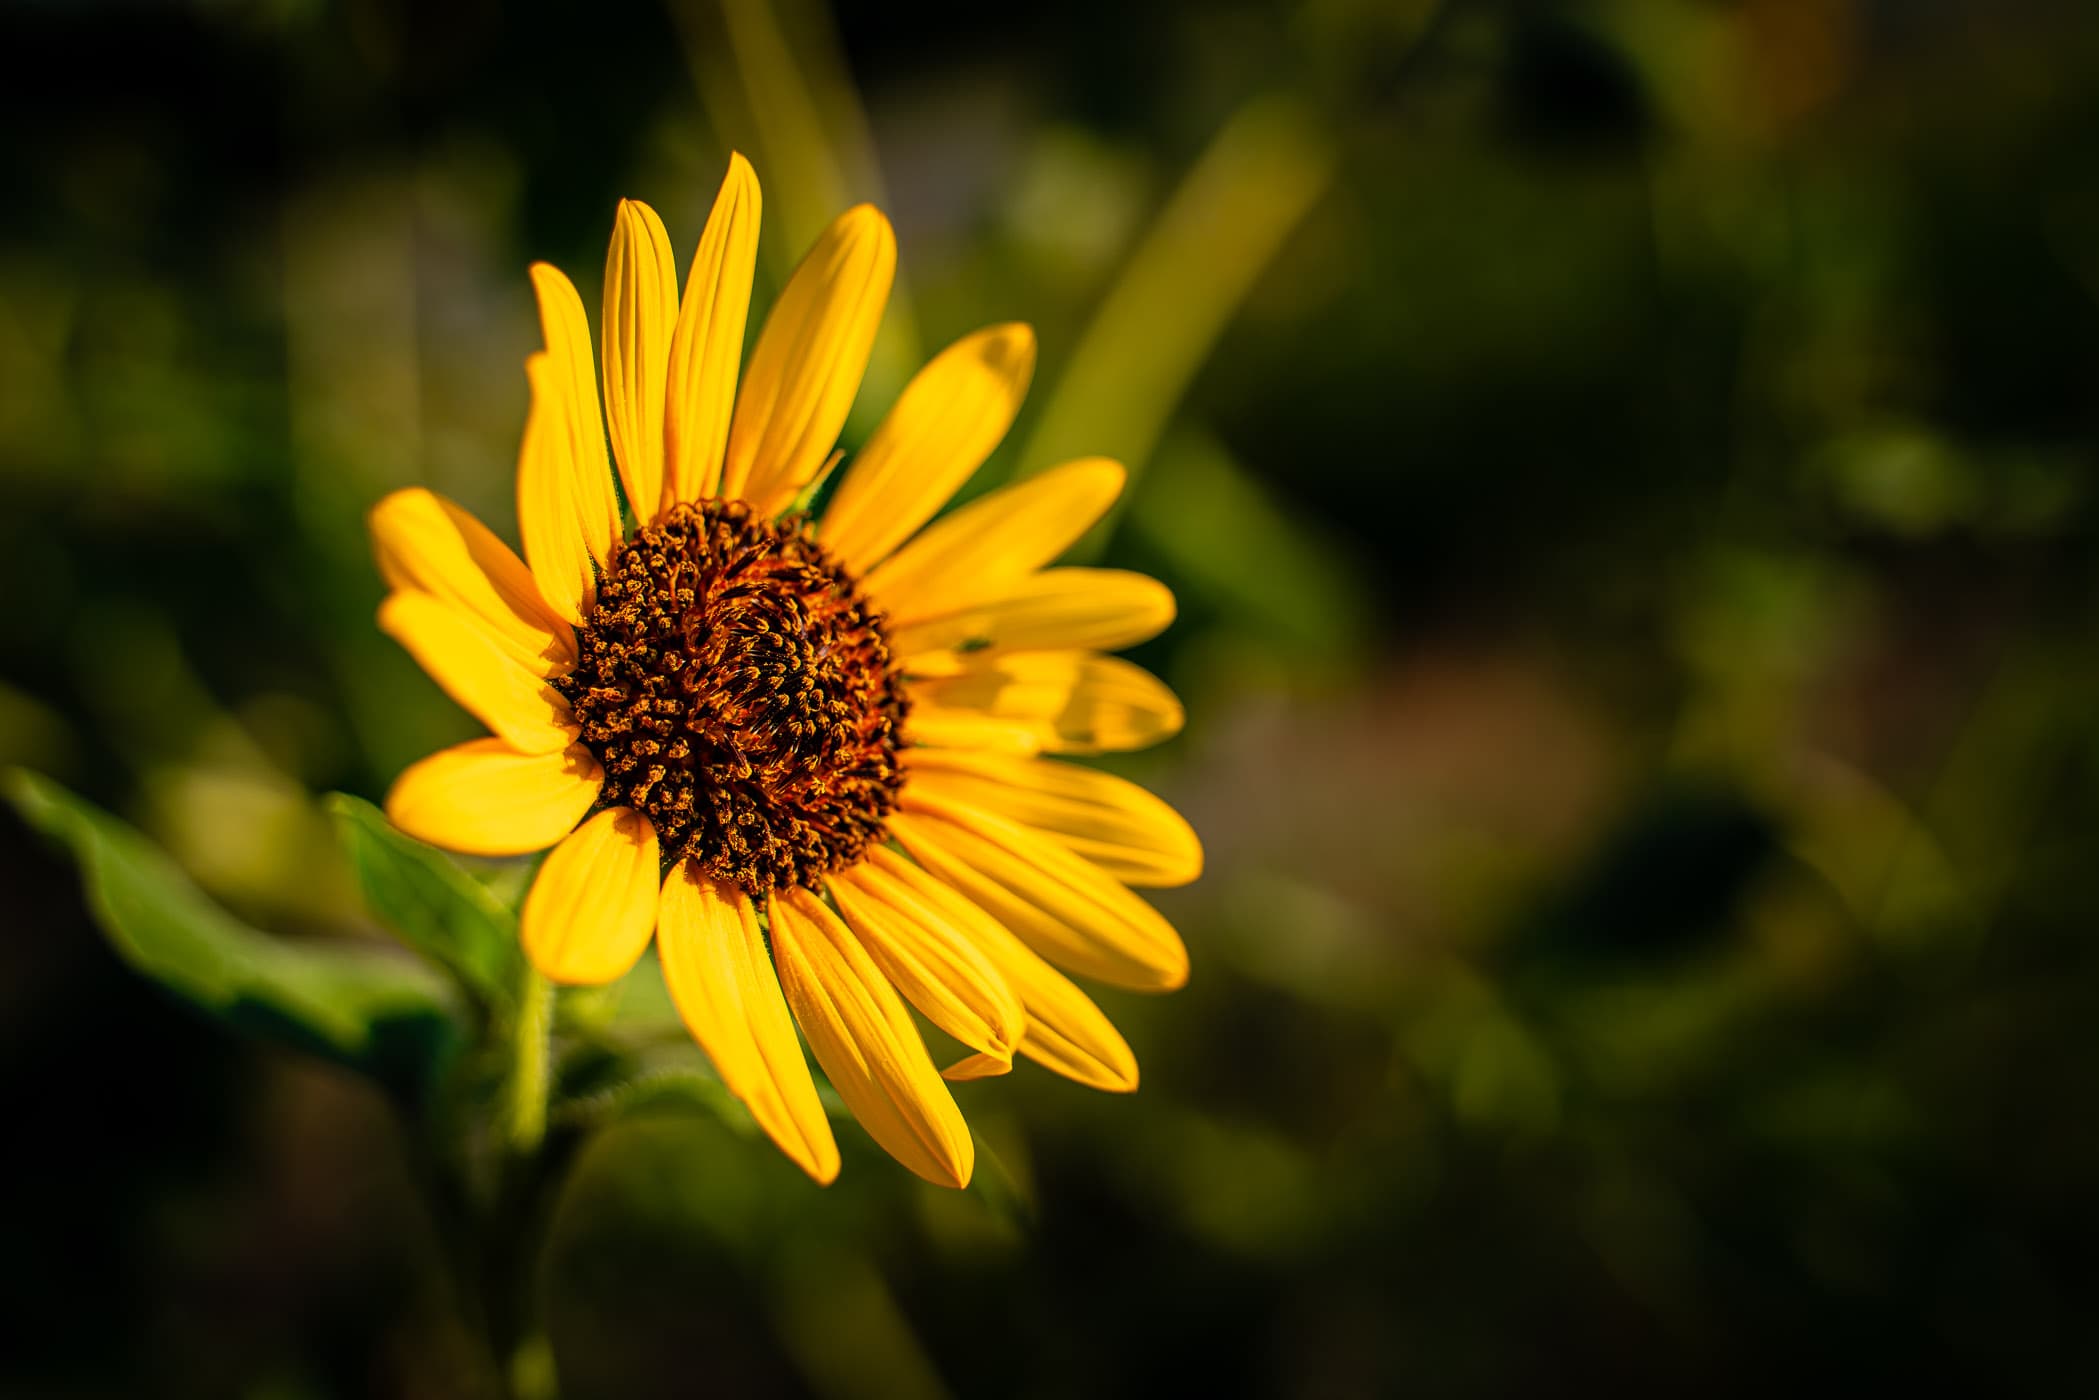 A sunflower spotted in a field near McKinney, Texas.